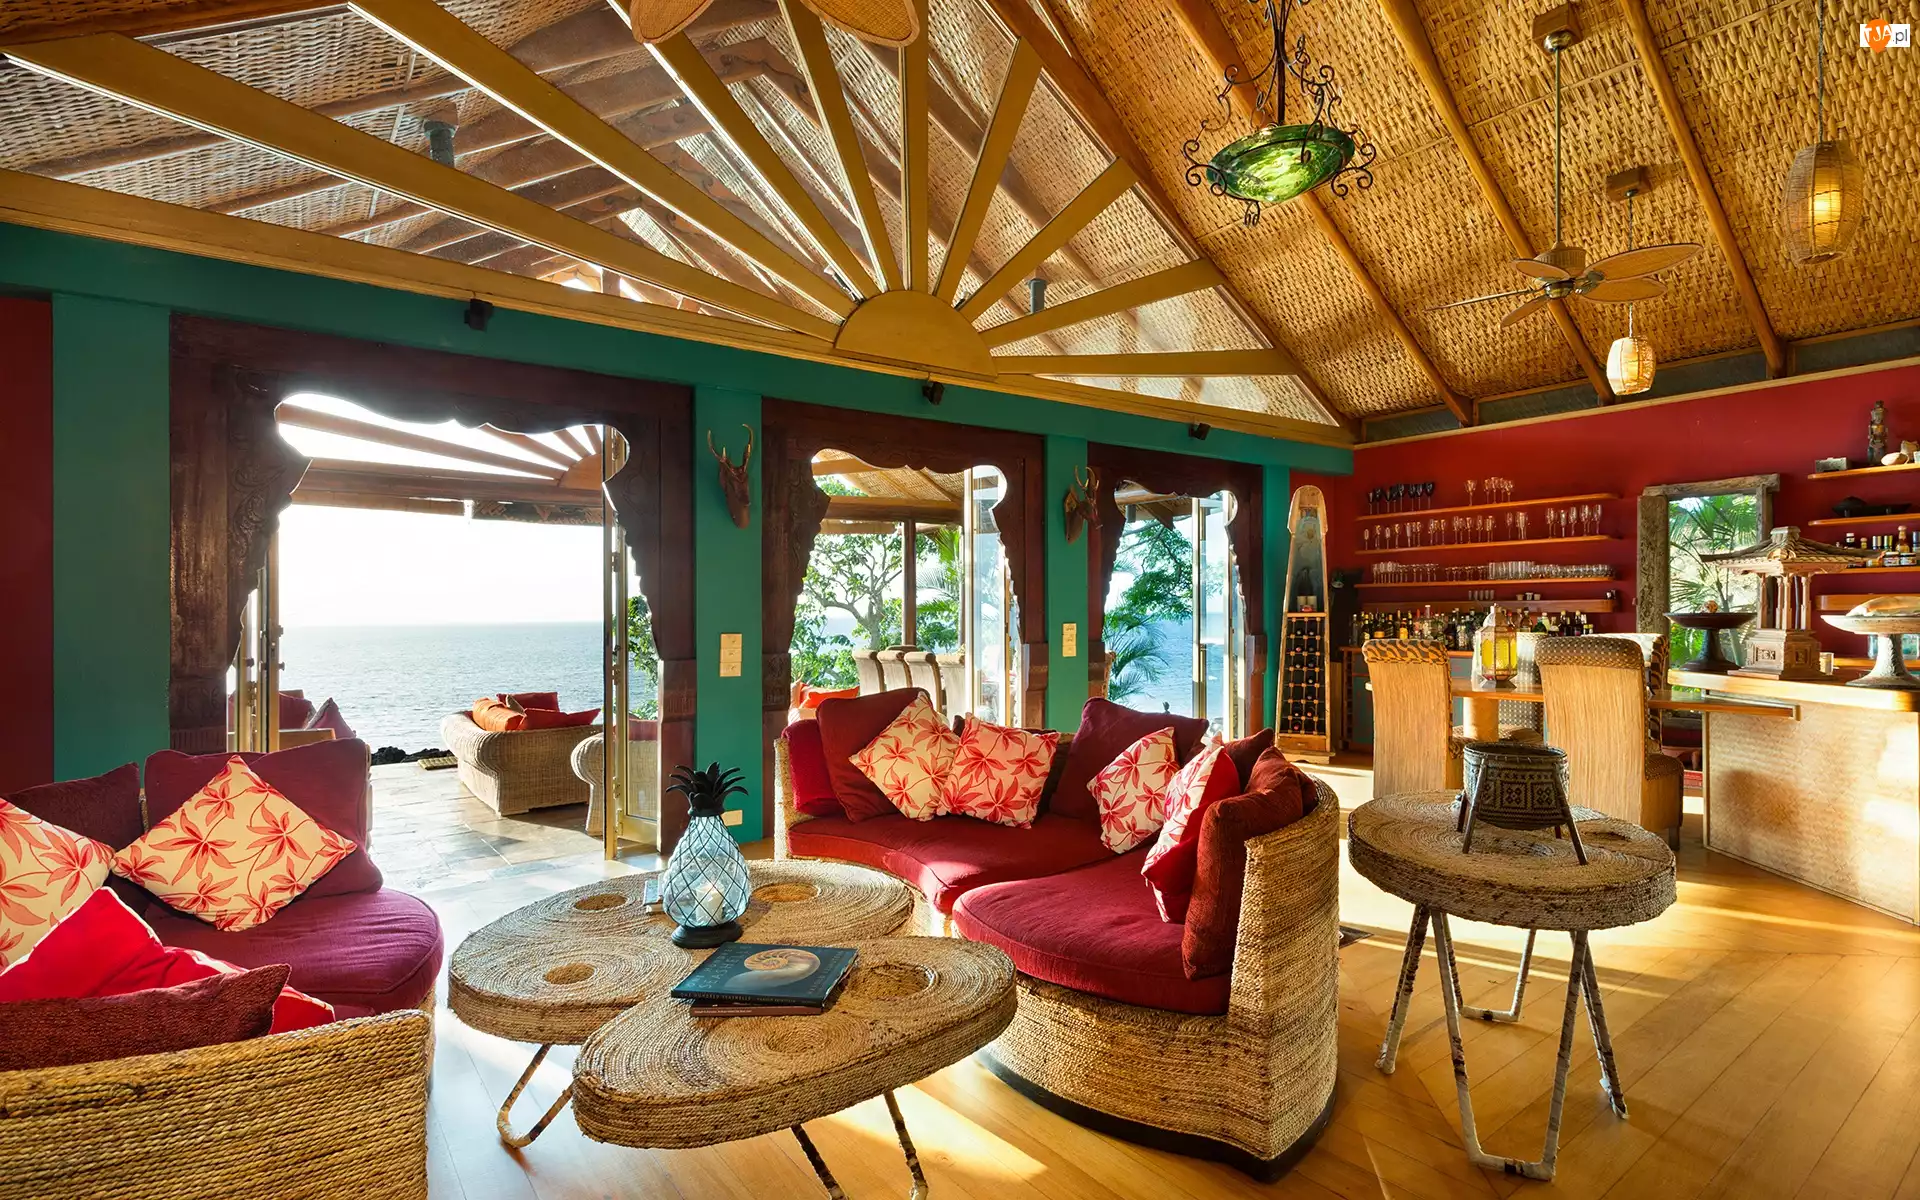 Kurort, Hotelowy, Fidżi, Salon, Ocean Spokojny